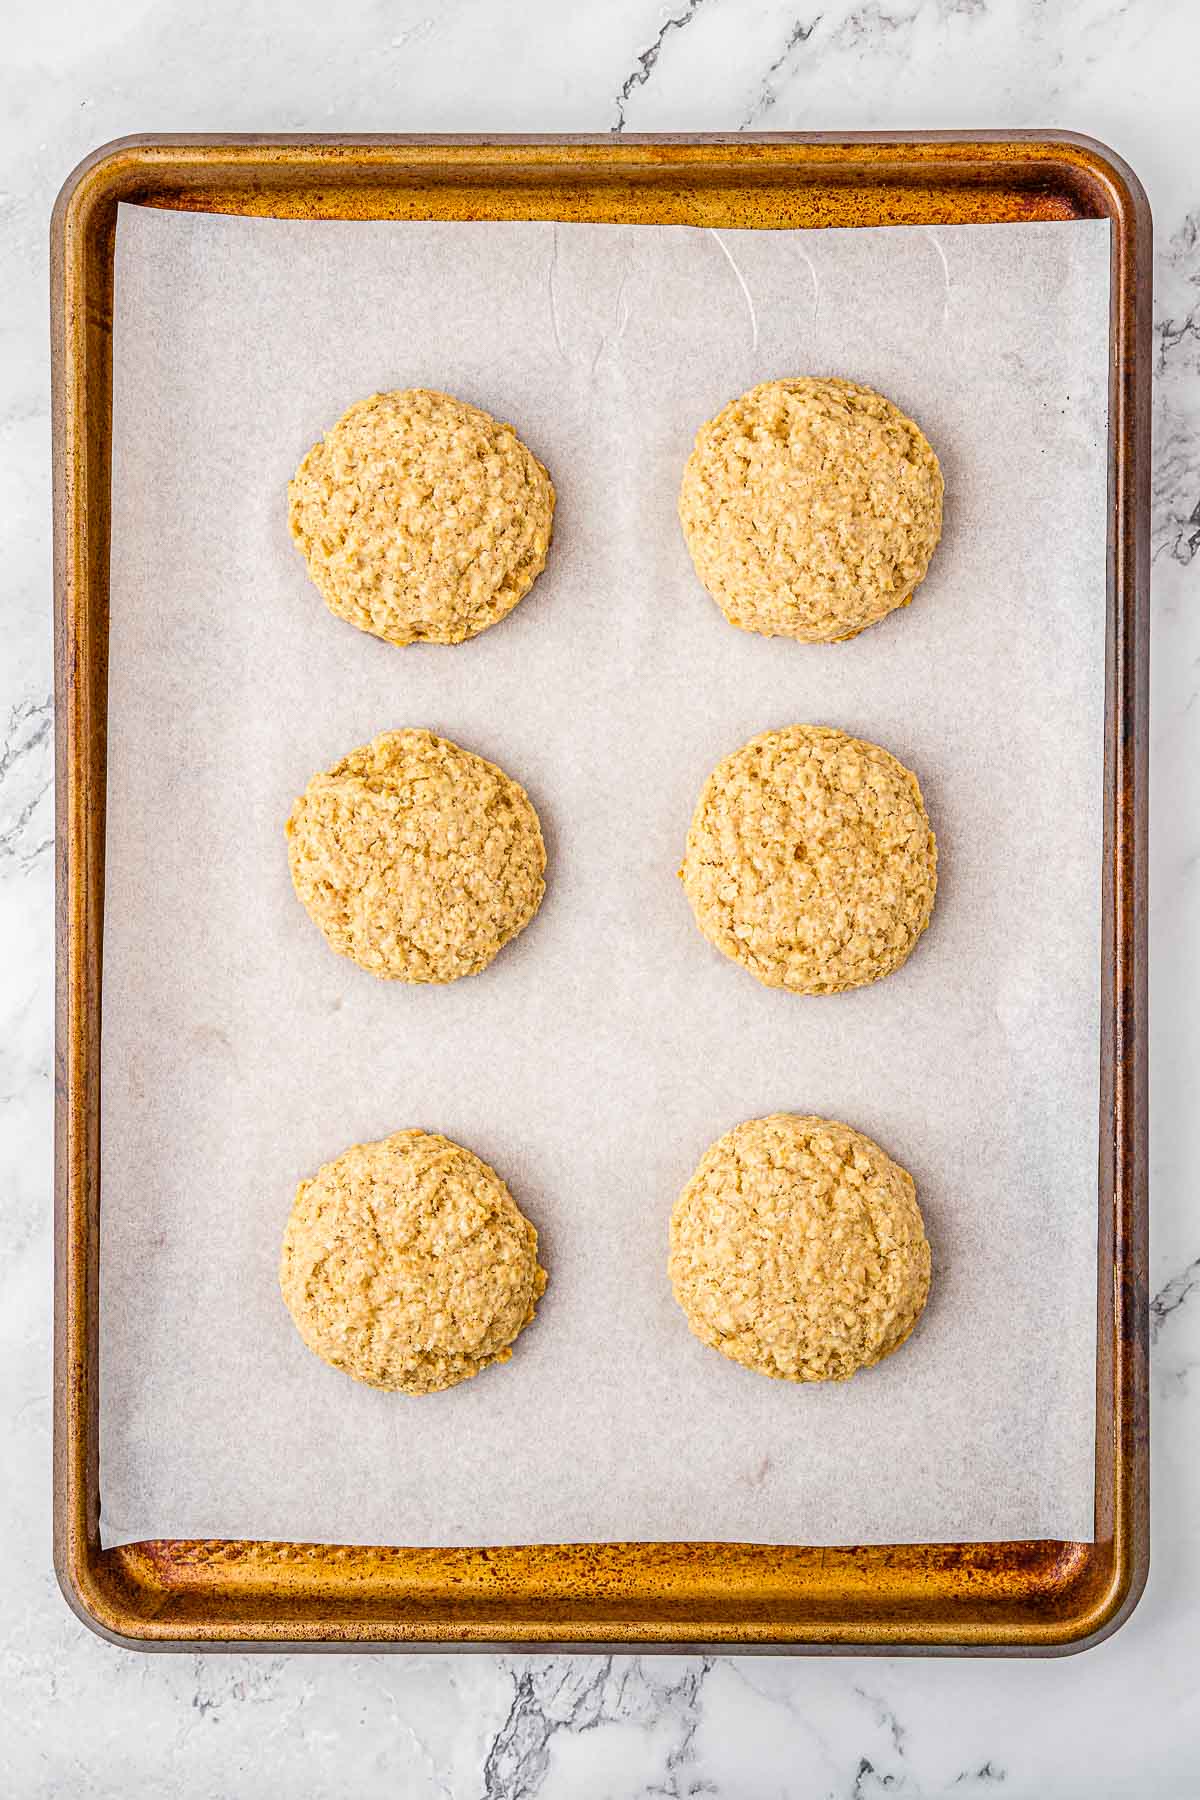 Six oatmeal cookies on a baking sheet.